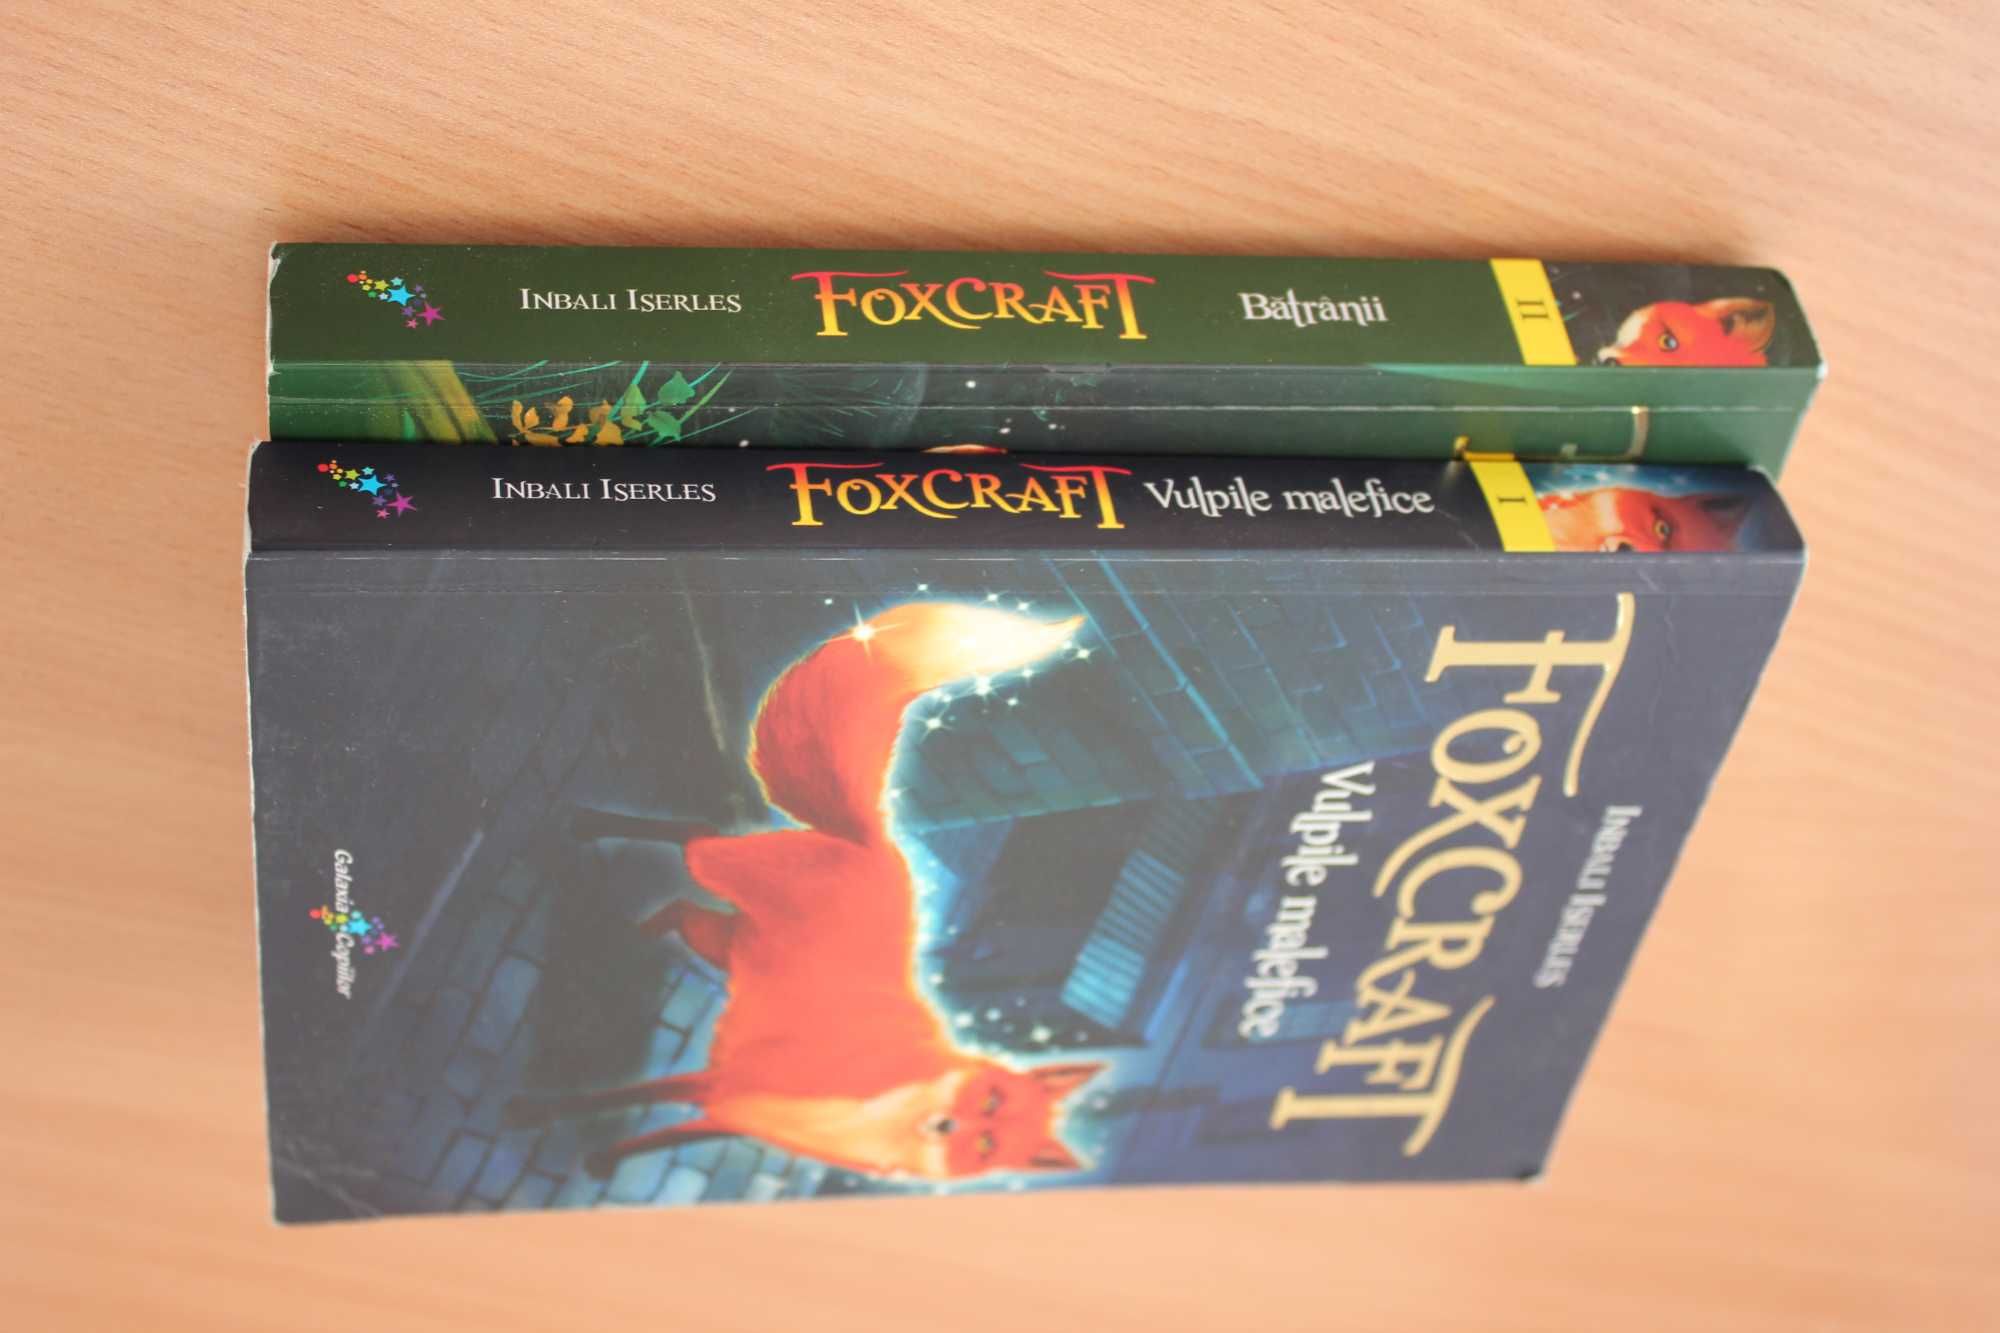 Carti copii: Foxcraft. Vulpile malefice - Cartea I, de Inbali Iserles